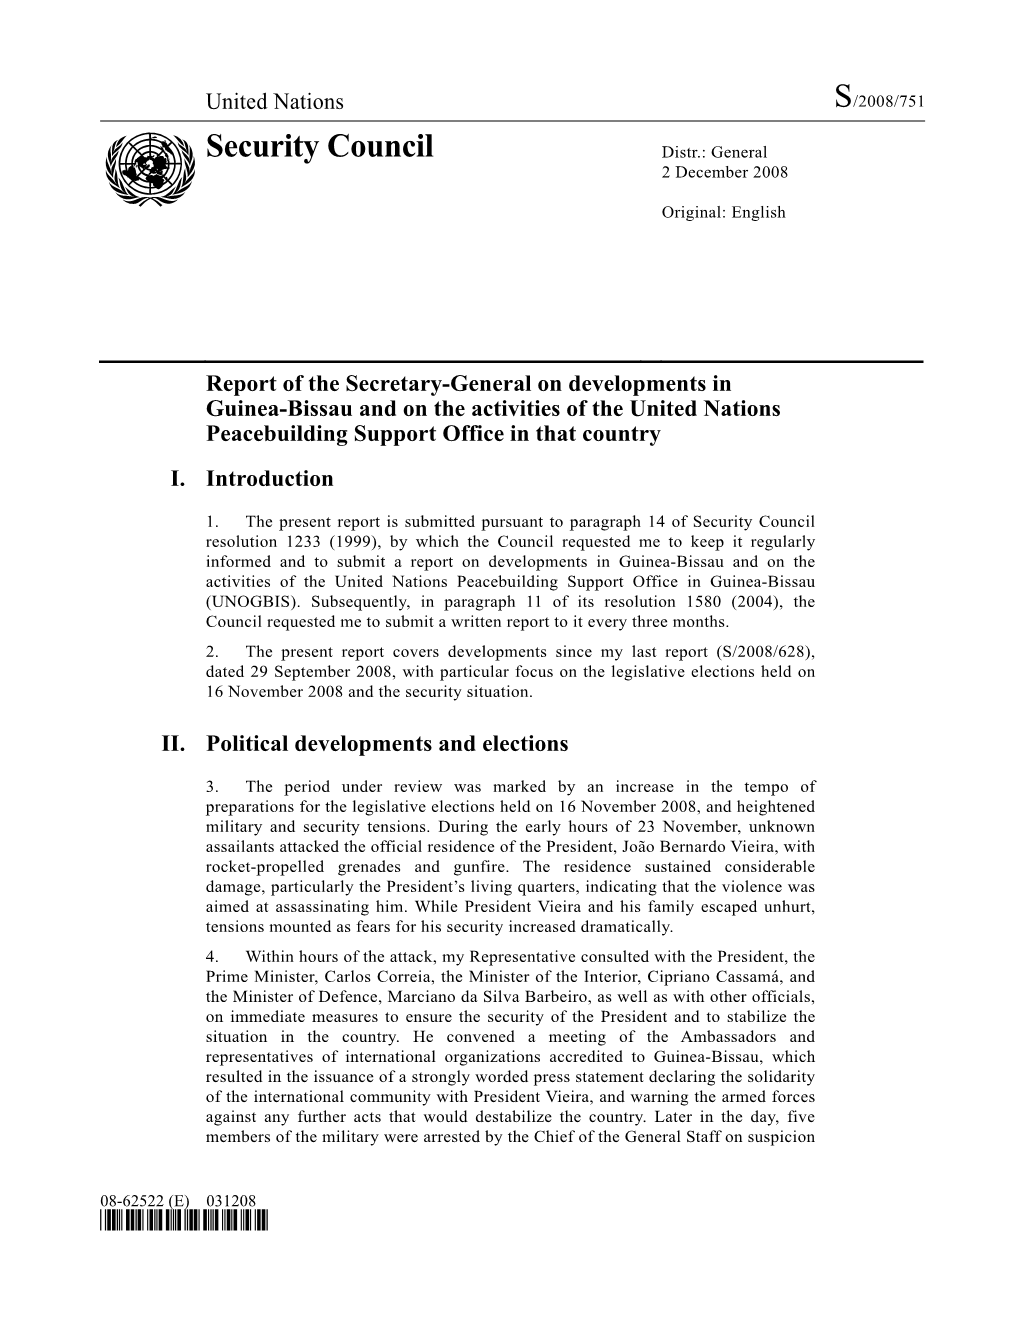 Security Council Distr.: General 2 December 2008